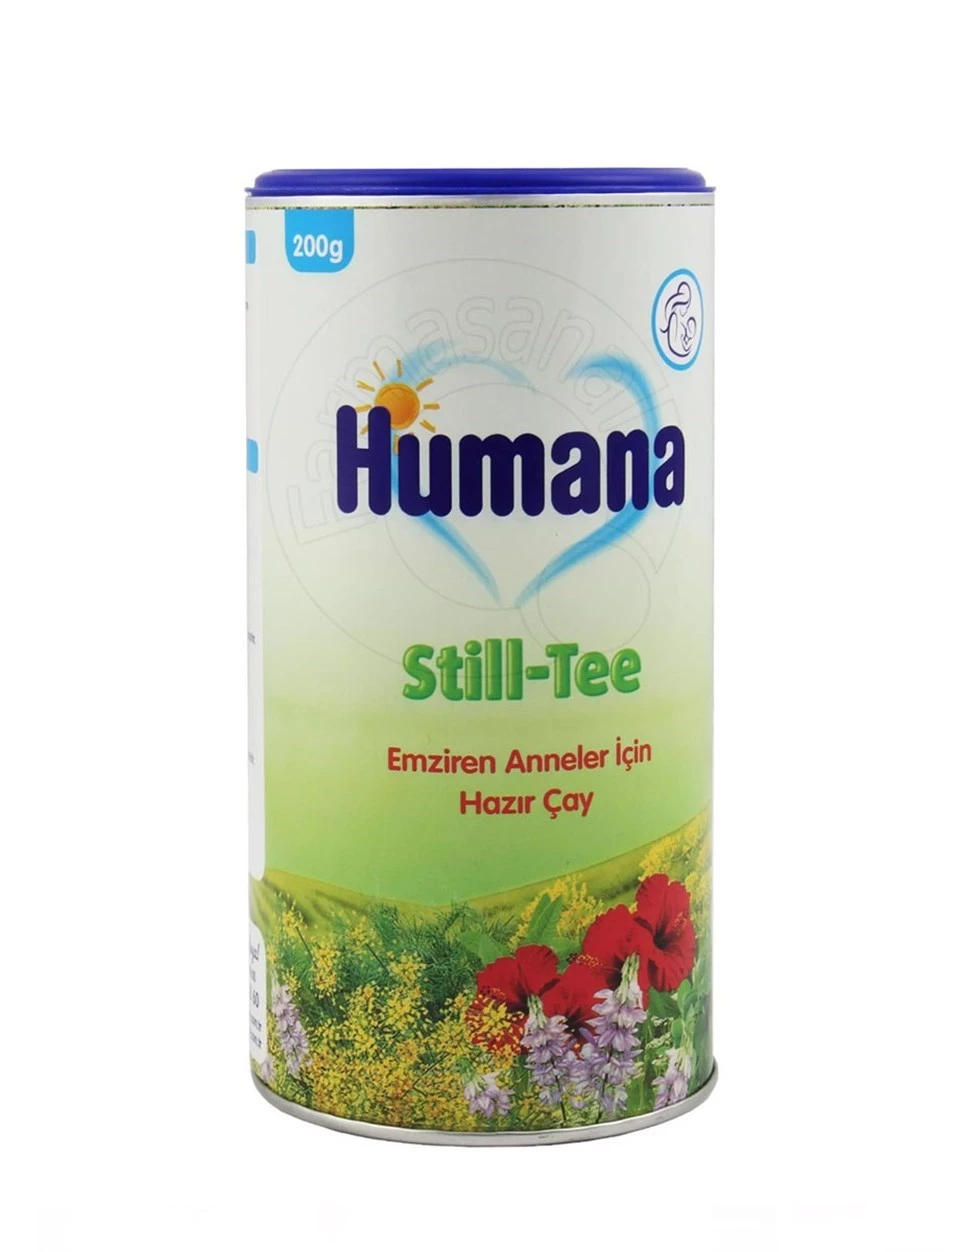 Humana Still-Tee Emziren Anneler için 200 gr